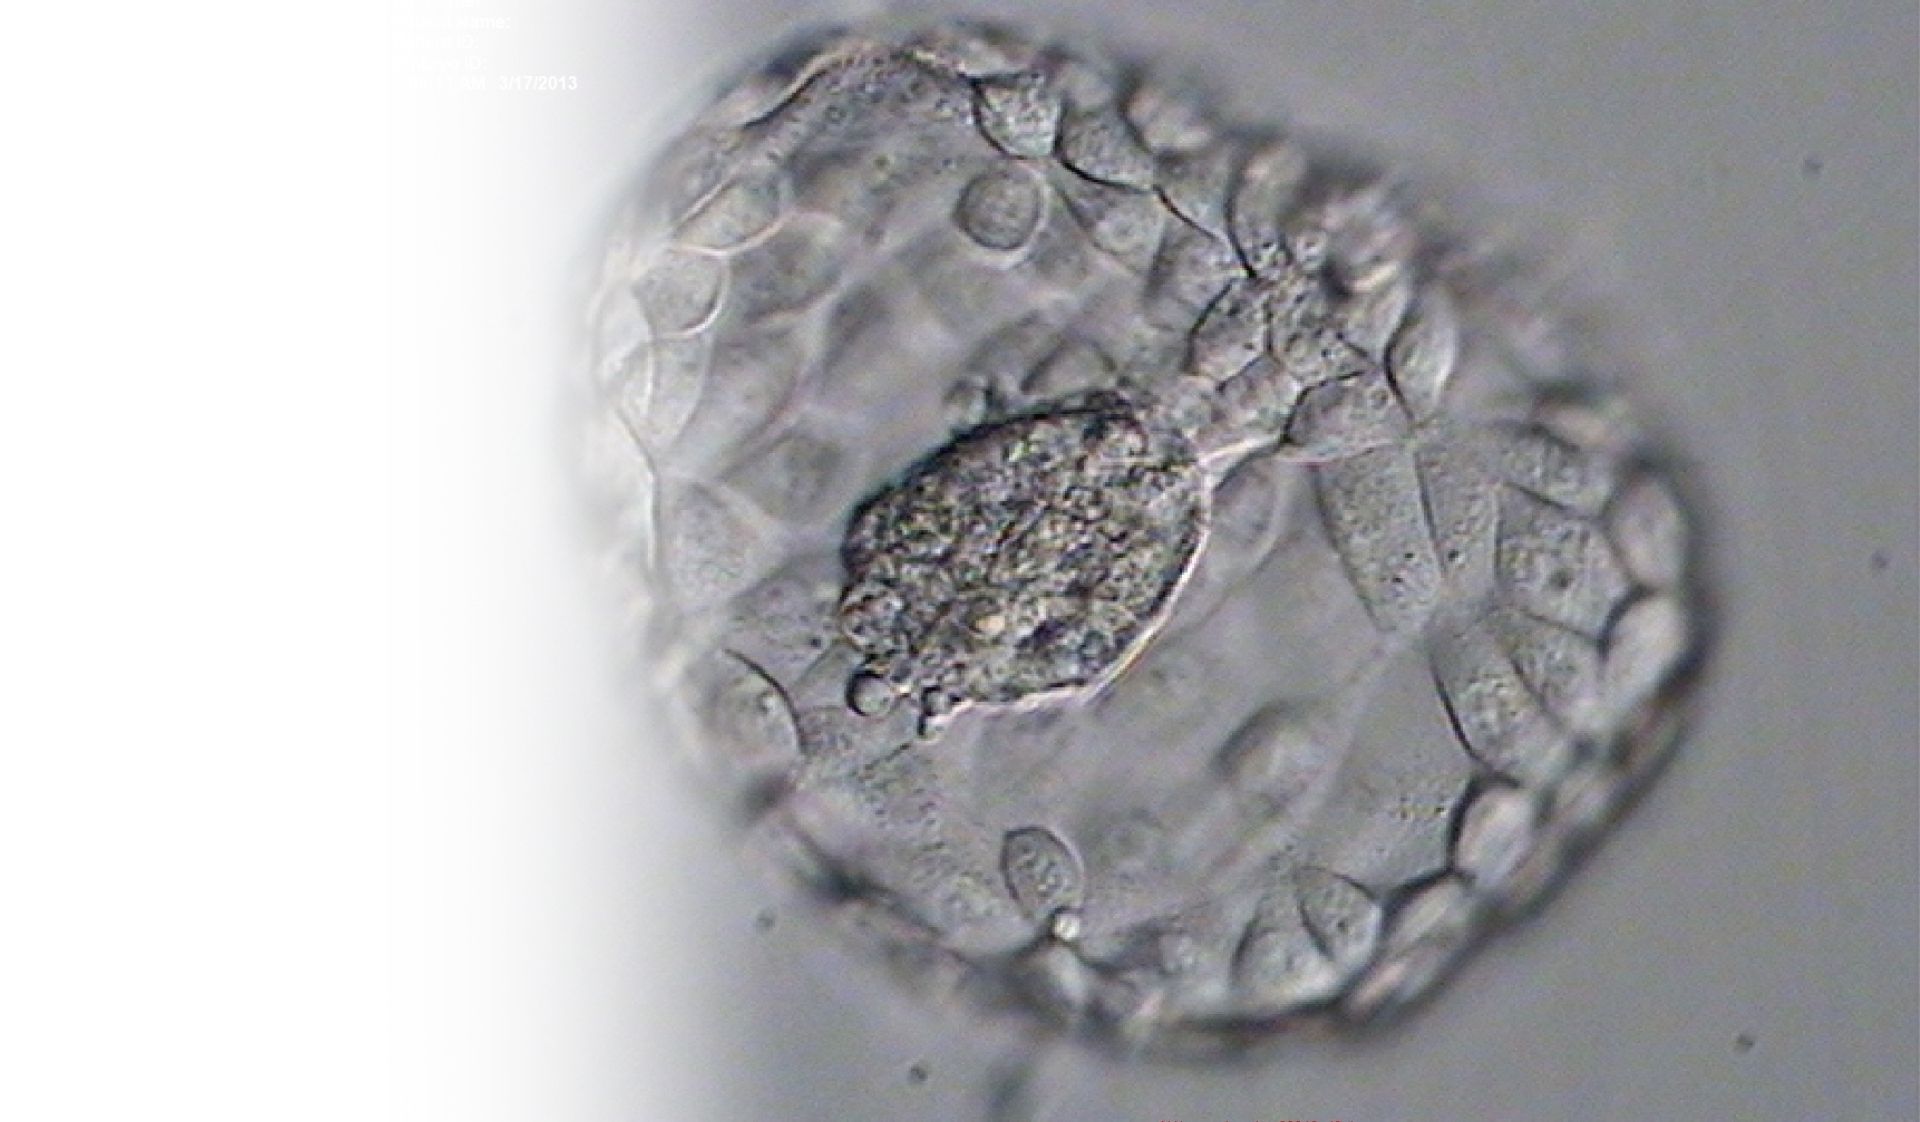 ivf embryo genetic testing